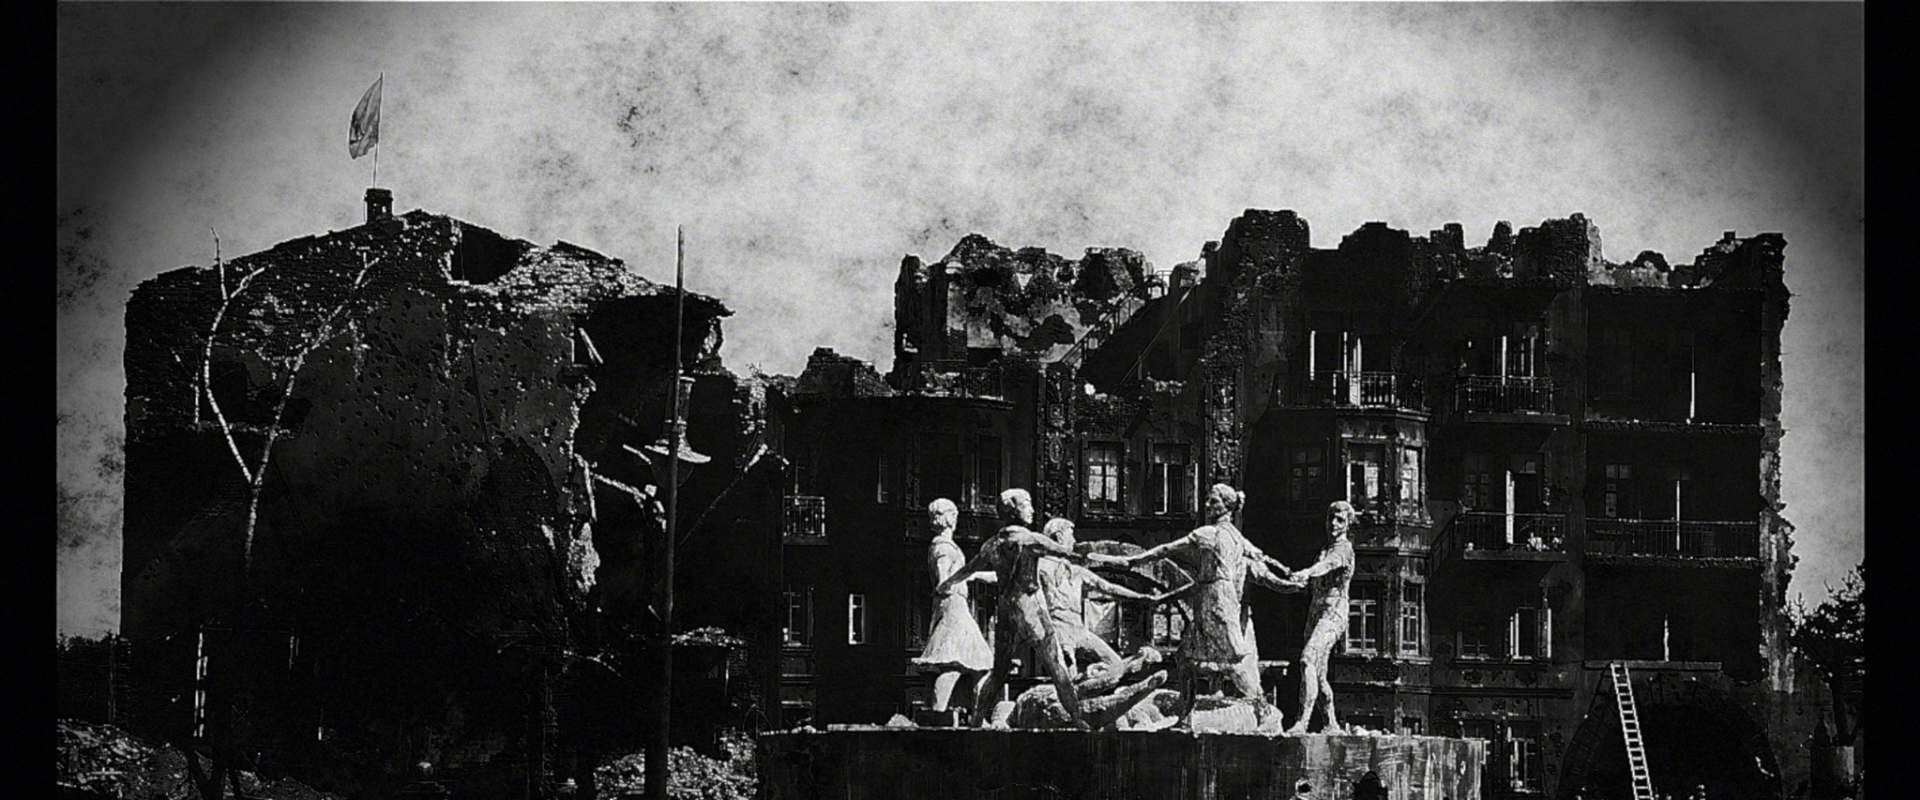 Stalingrad background 1